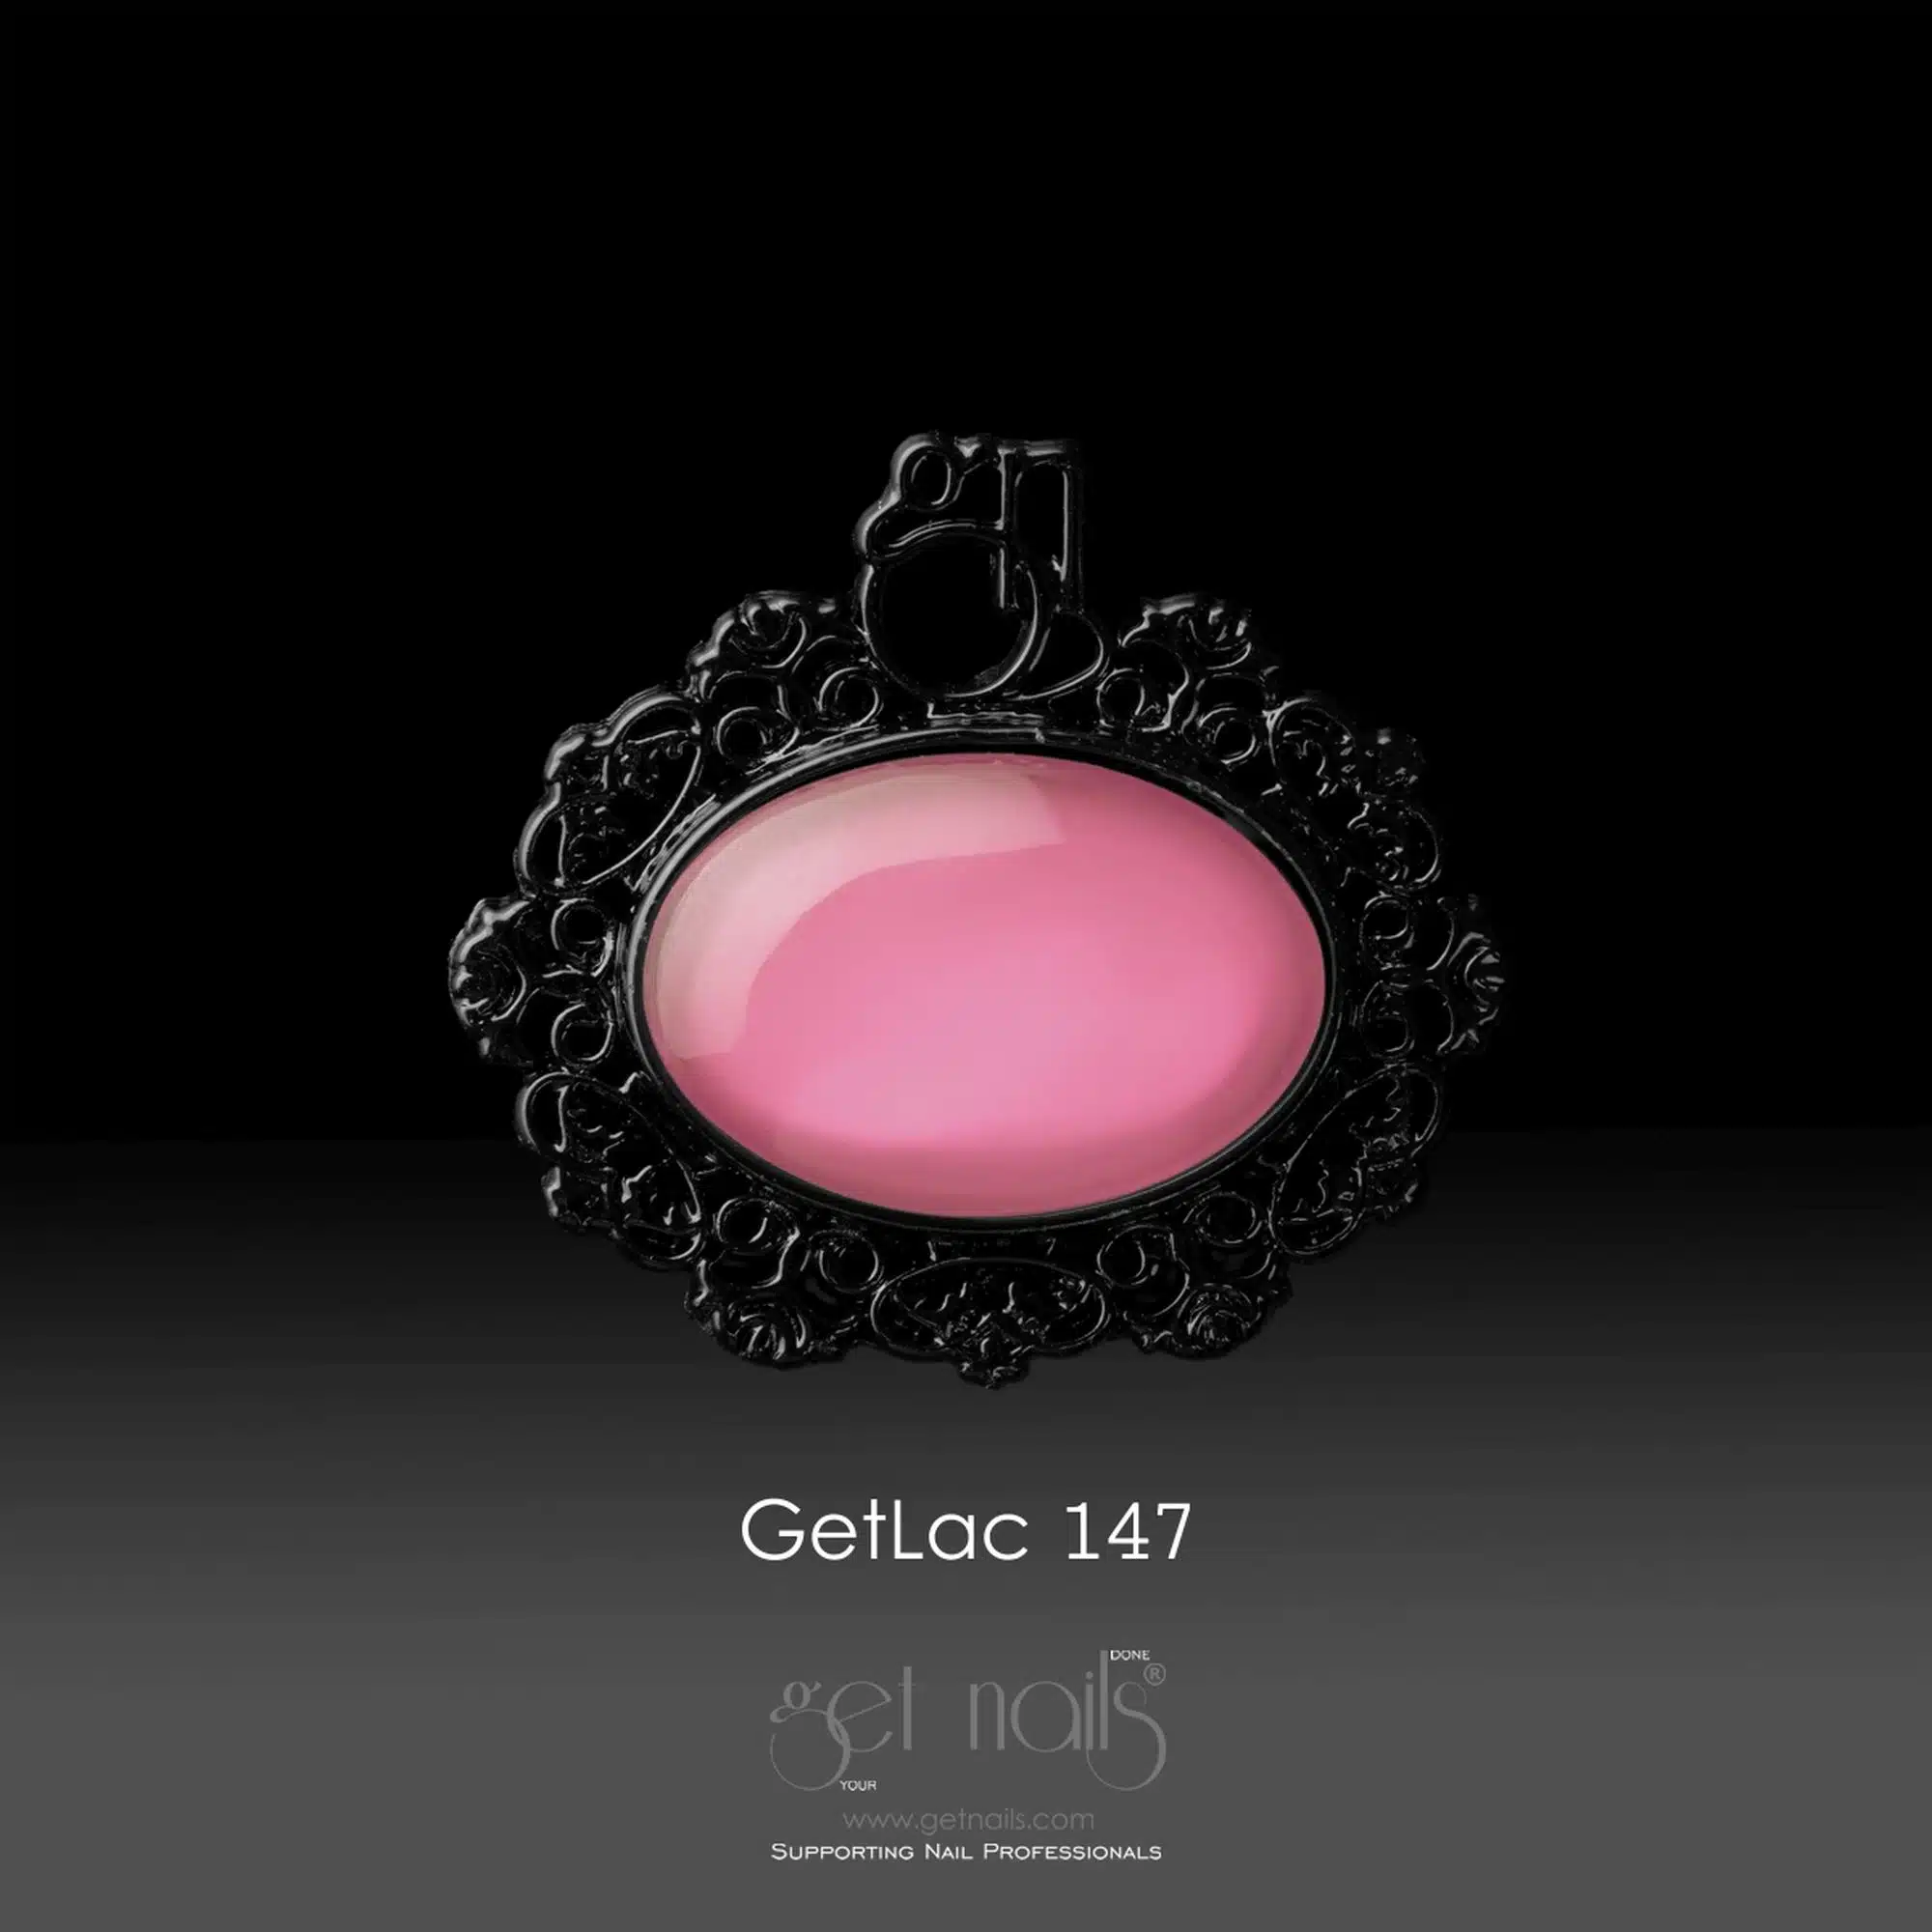 Get Nails Austria - GetLac 147 15г